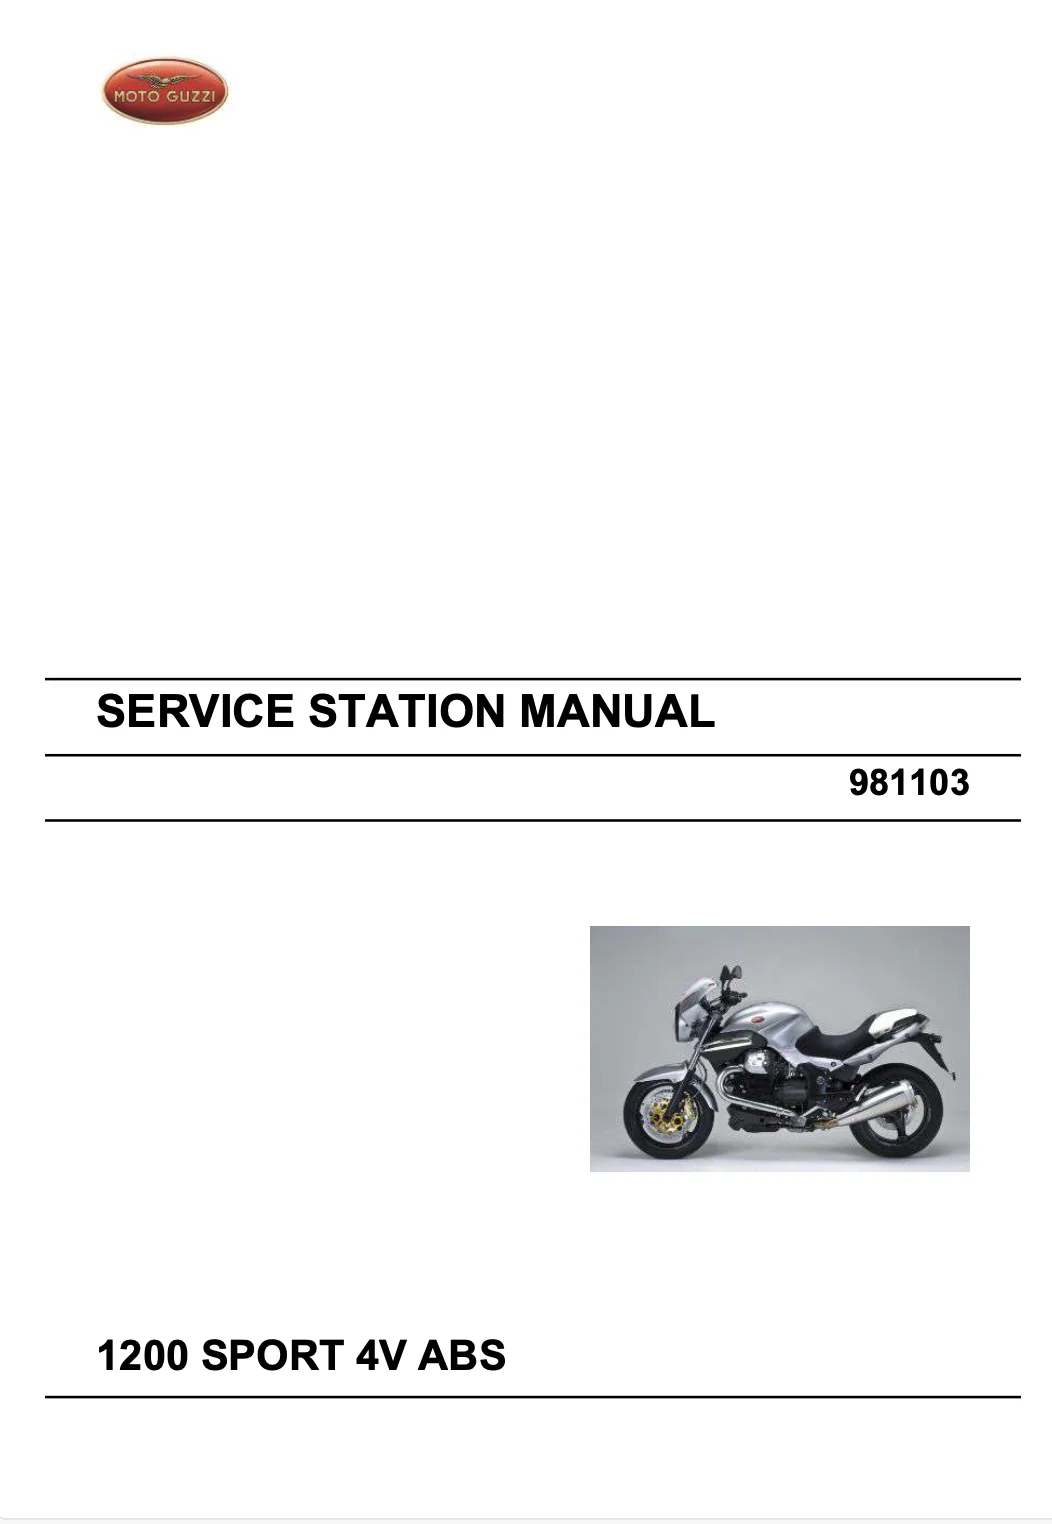 Moto Guzzi Sport 4V ABS 1200 models 2008 to 2013 Service Manual original motorcycle manufacturer's PDF repair manual download